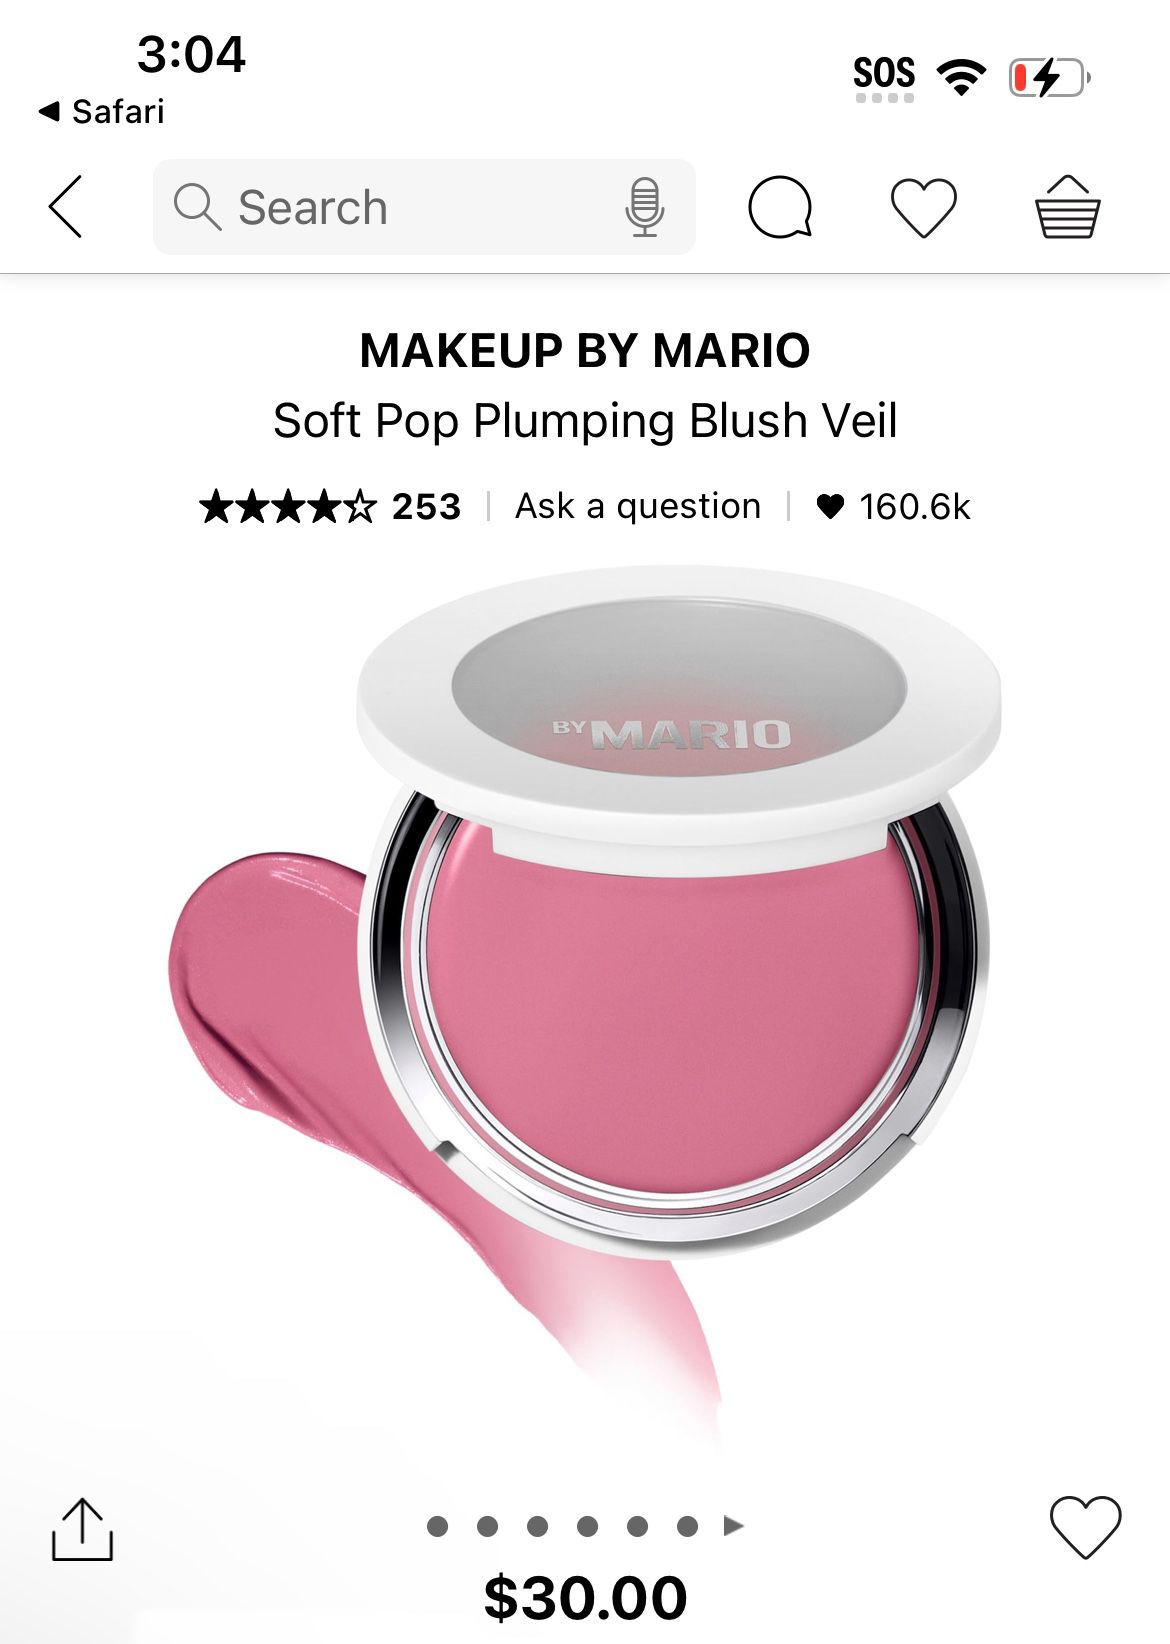 Makeup by mario blush perfect pink 